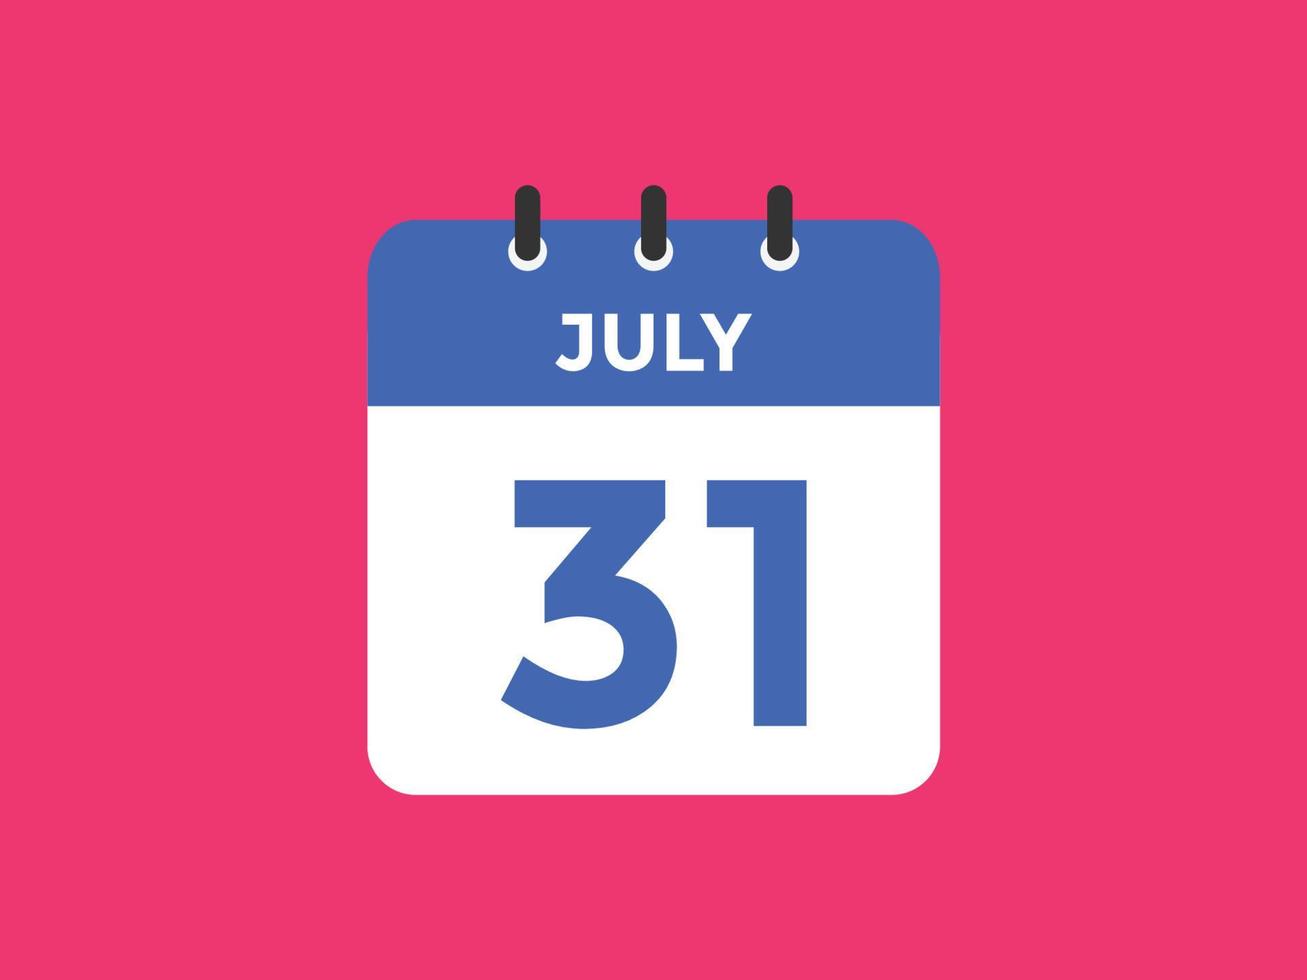 july 31 calendar reminder. 31th july daily calendar icon template. Calendar 31th july icon Design template. Vector illustration